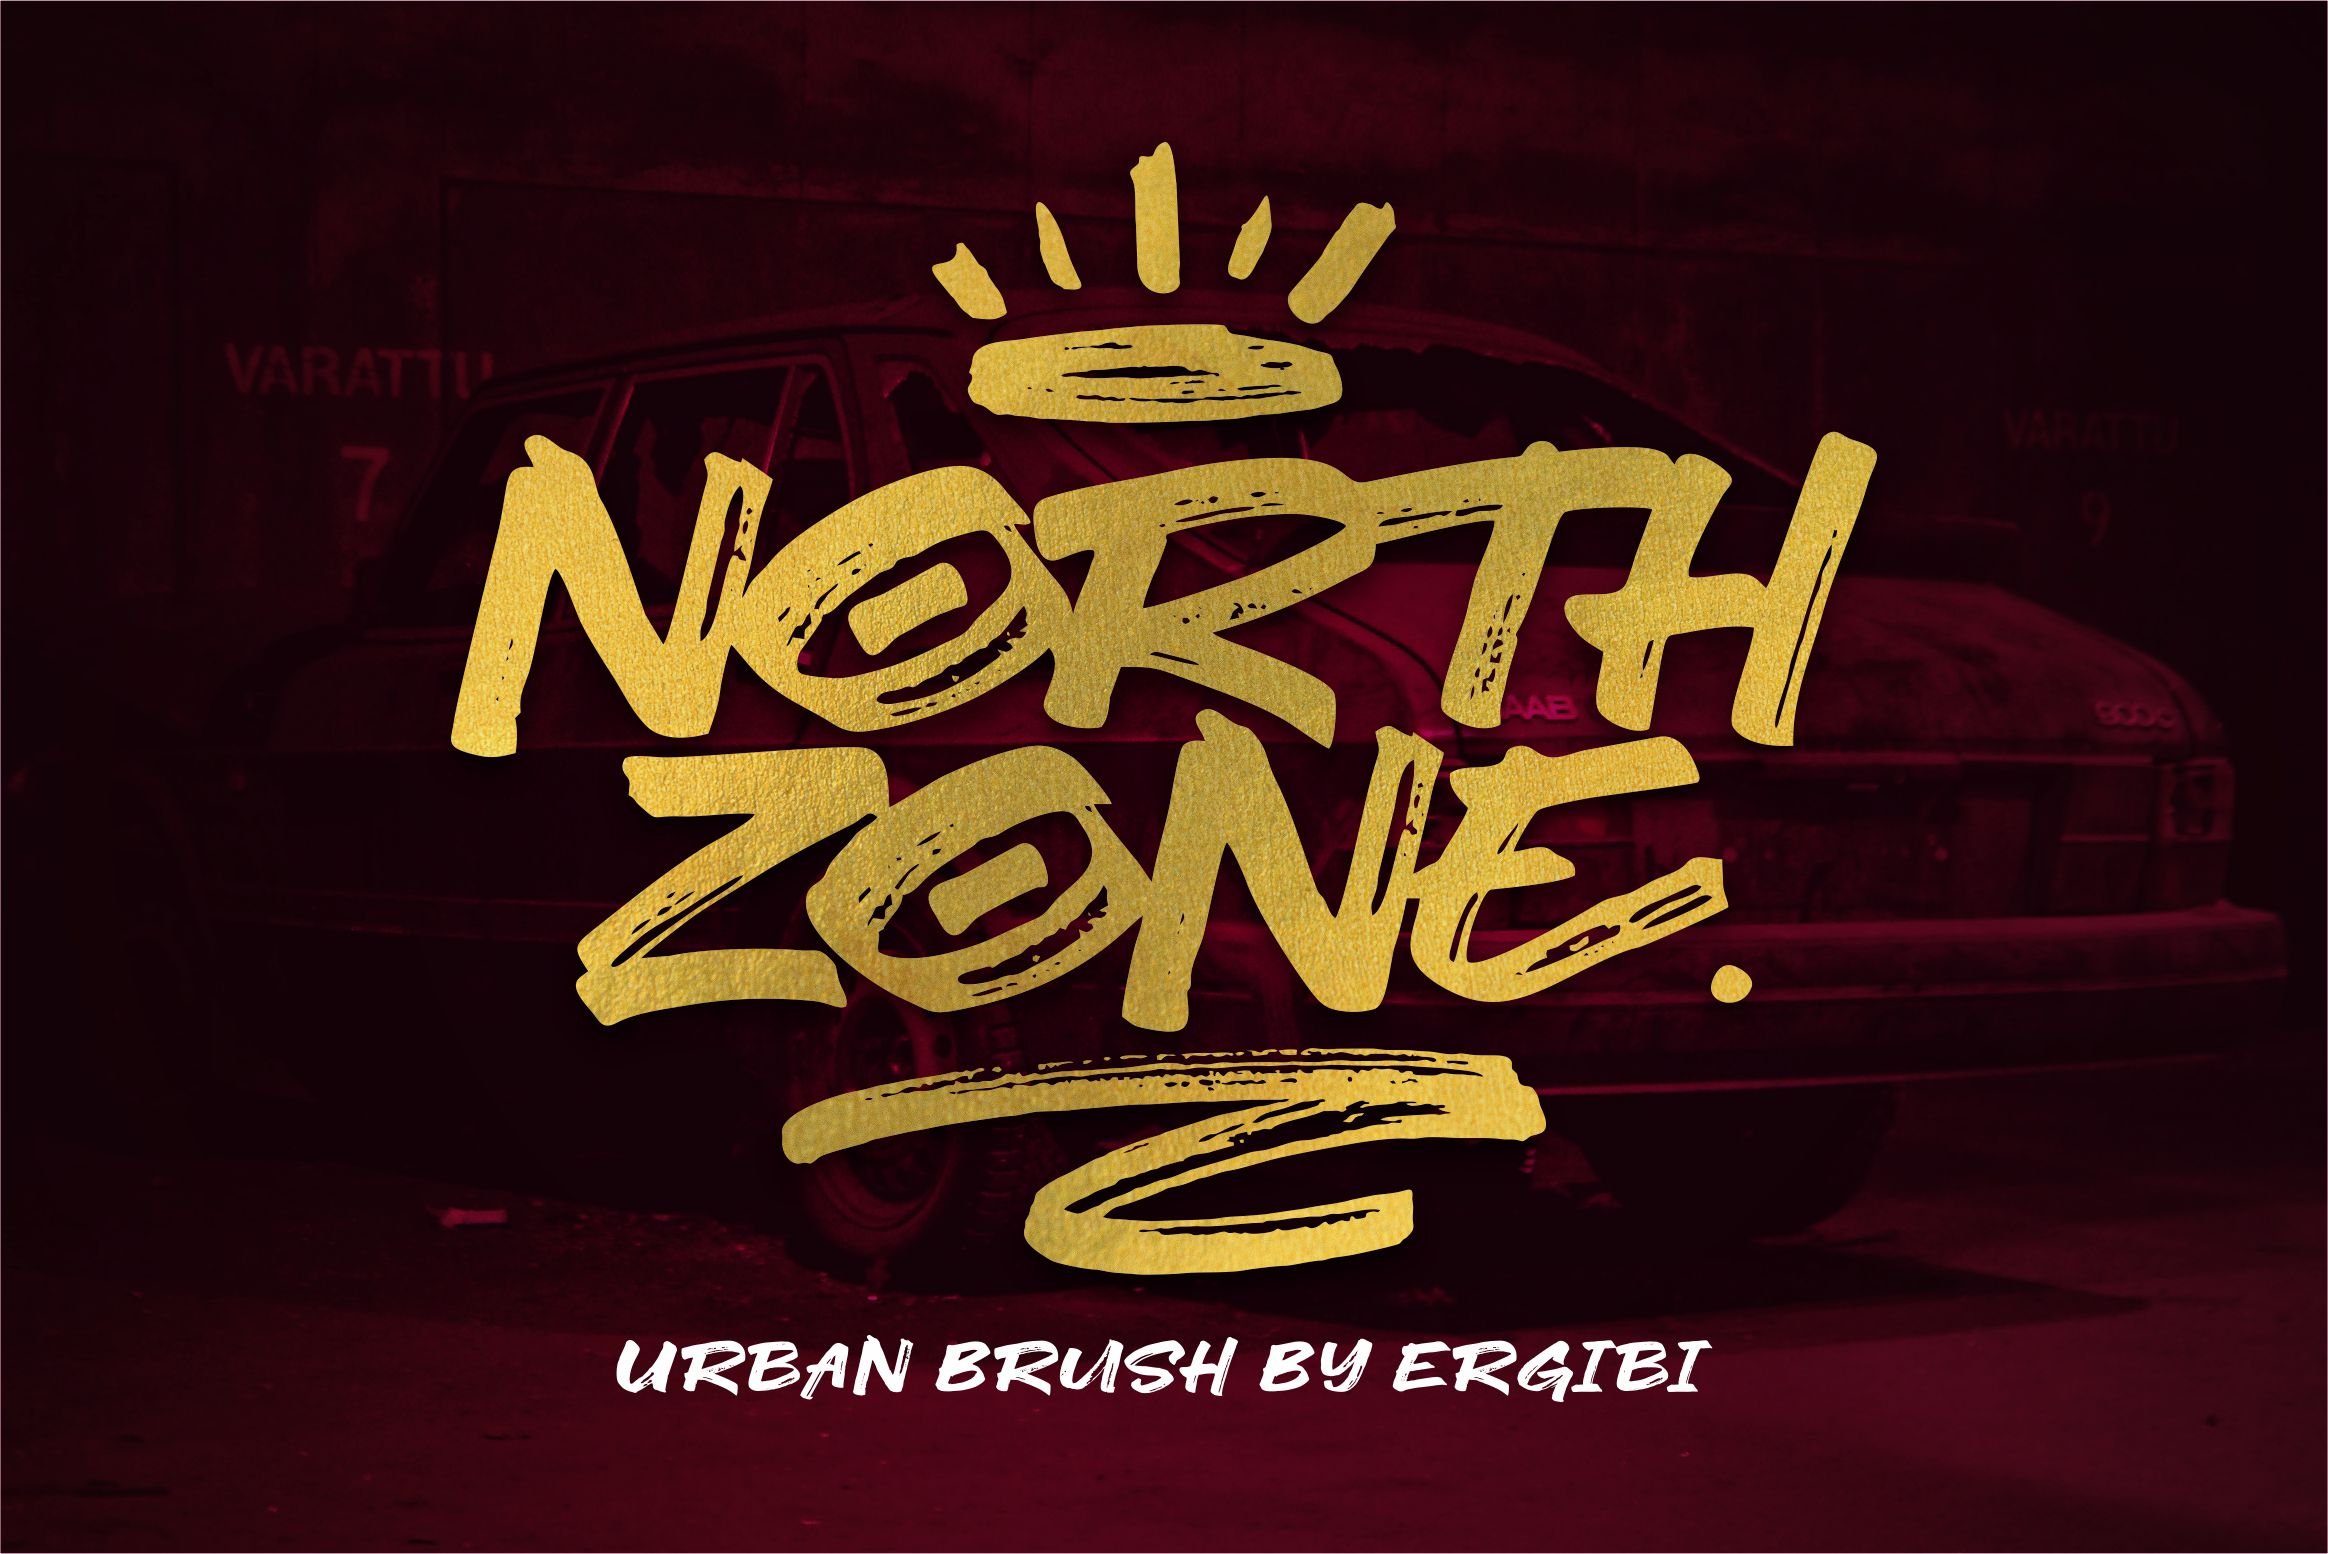 NORTH ZONE. //Urban Brush// cover image.